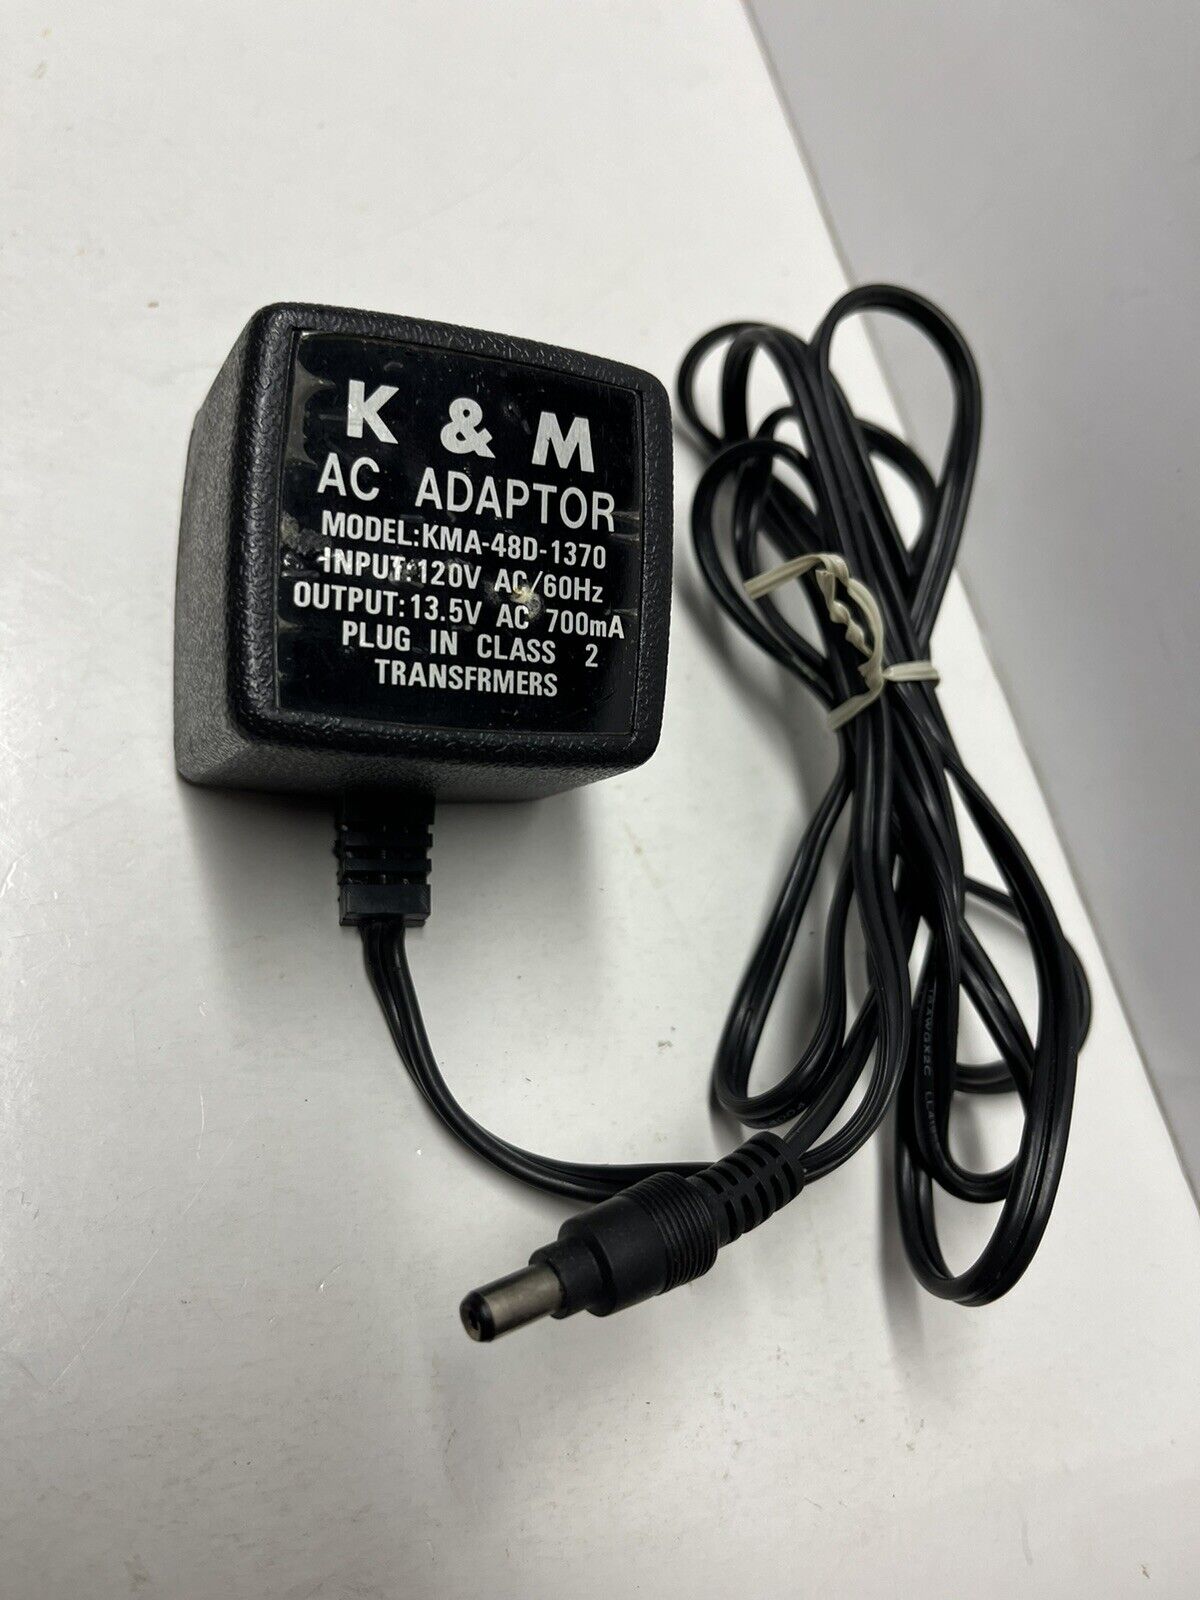 *Brand NEW* 700mA AC DC ADAPTER K & M AC Adaptor KMA-48D-1370 13.5V AC POWER SUPPLY